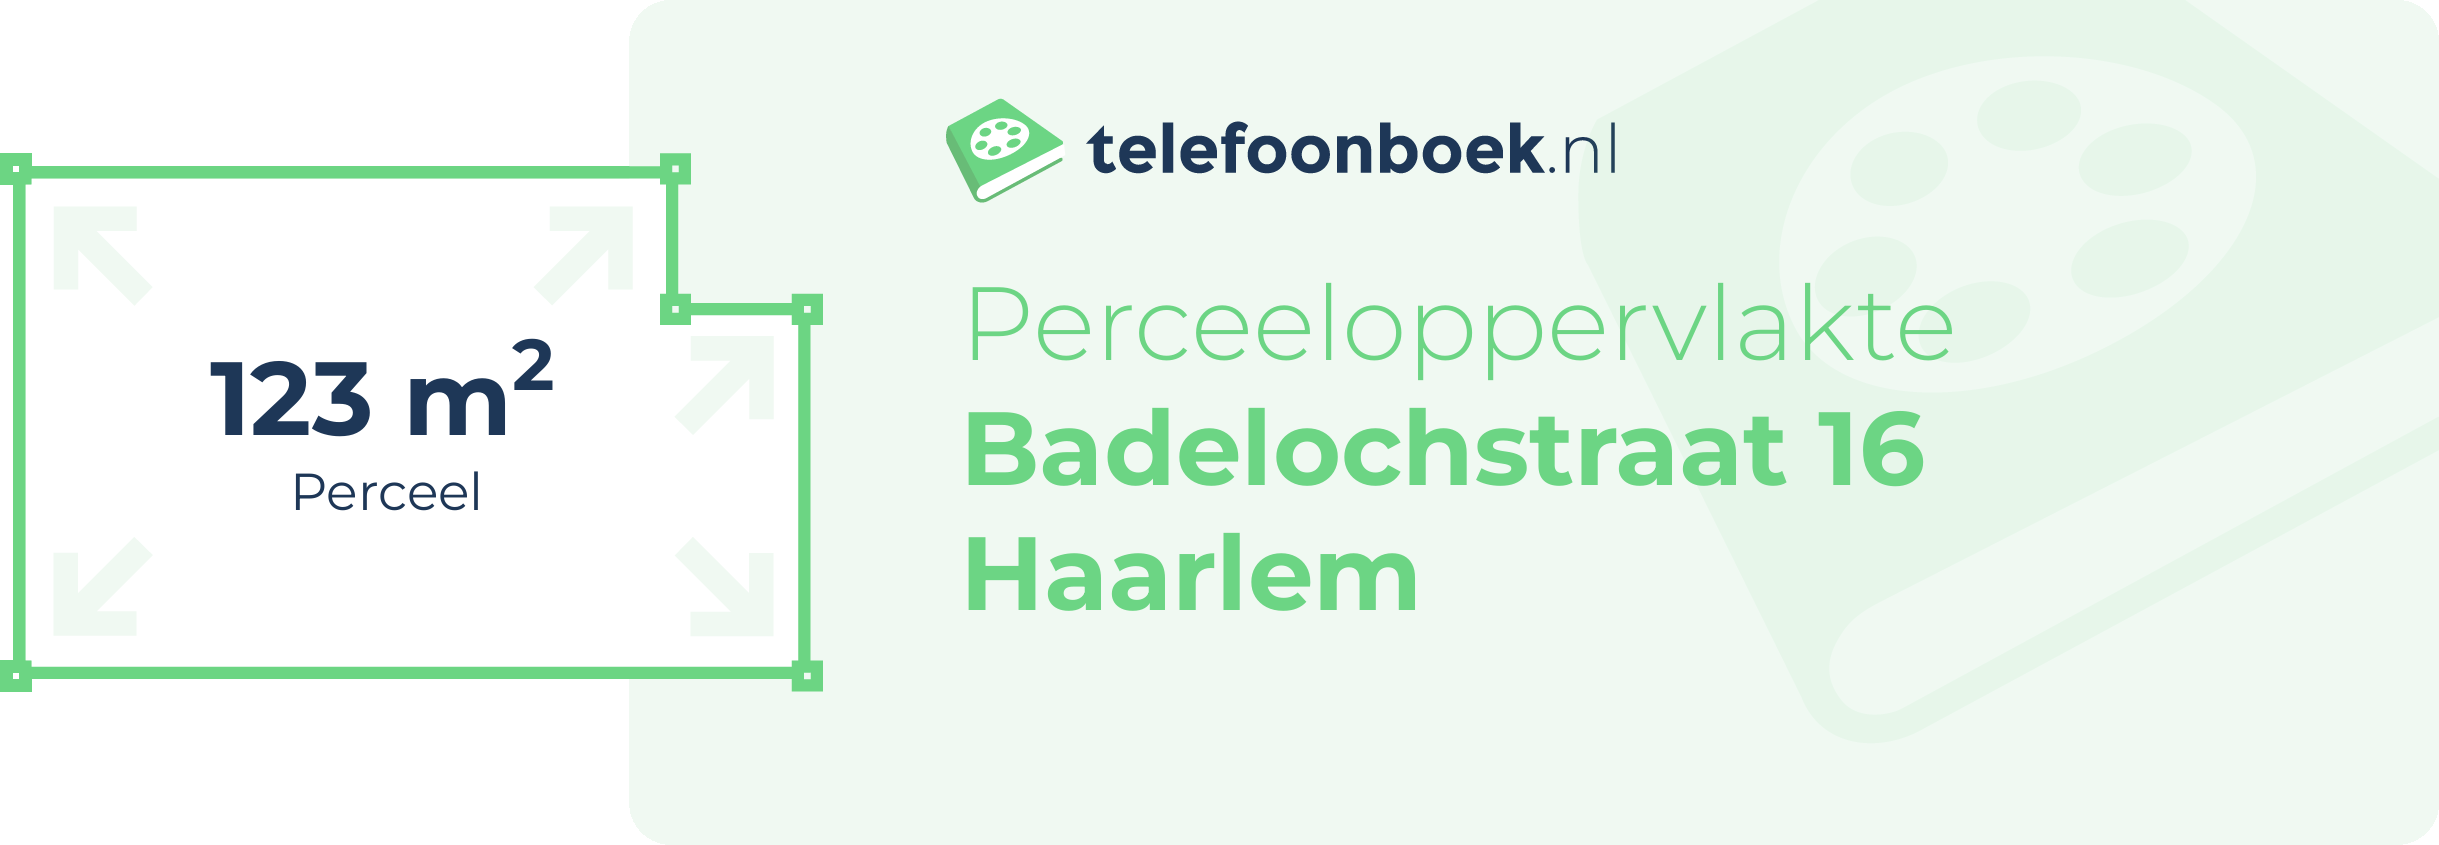 Perceeloppervlakte Badelochstraat 16 Haarlem